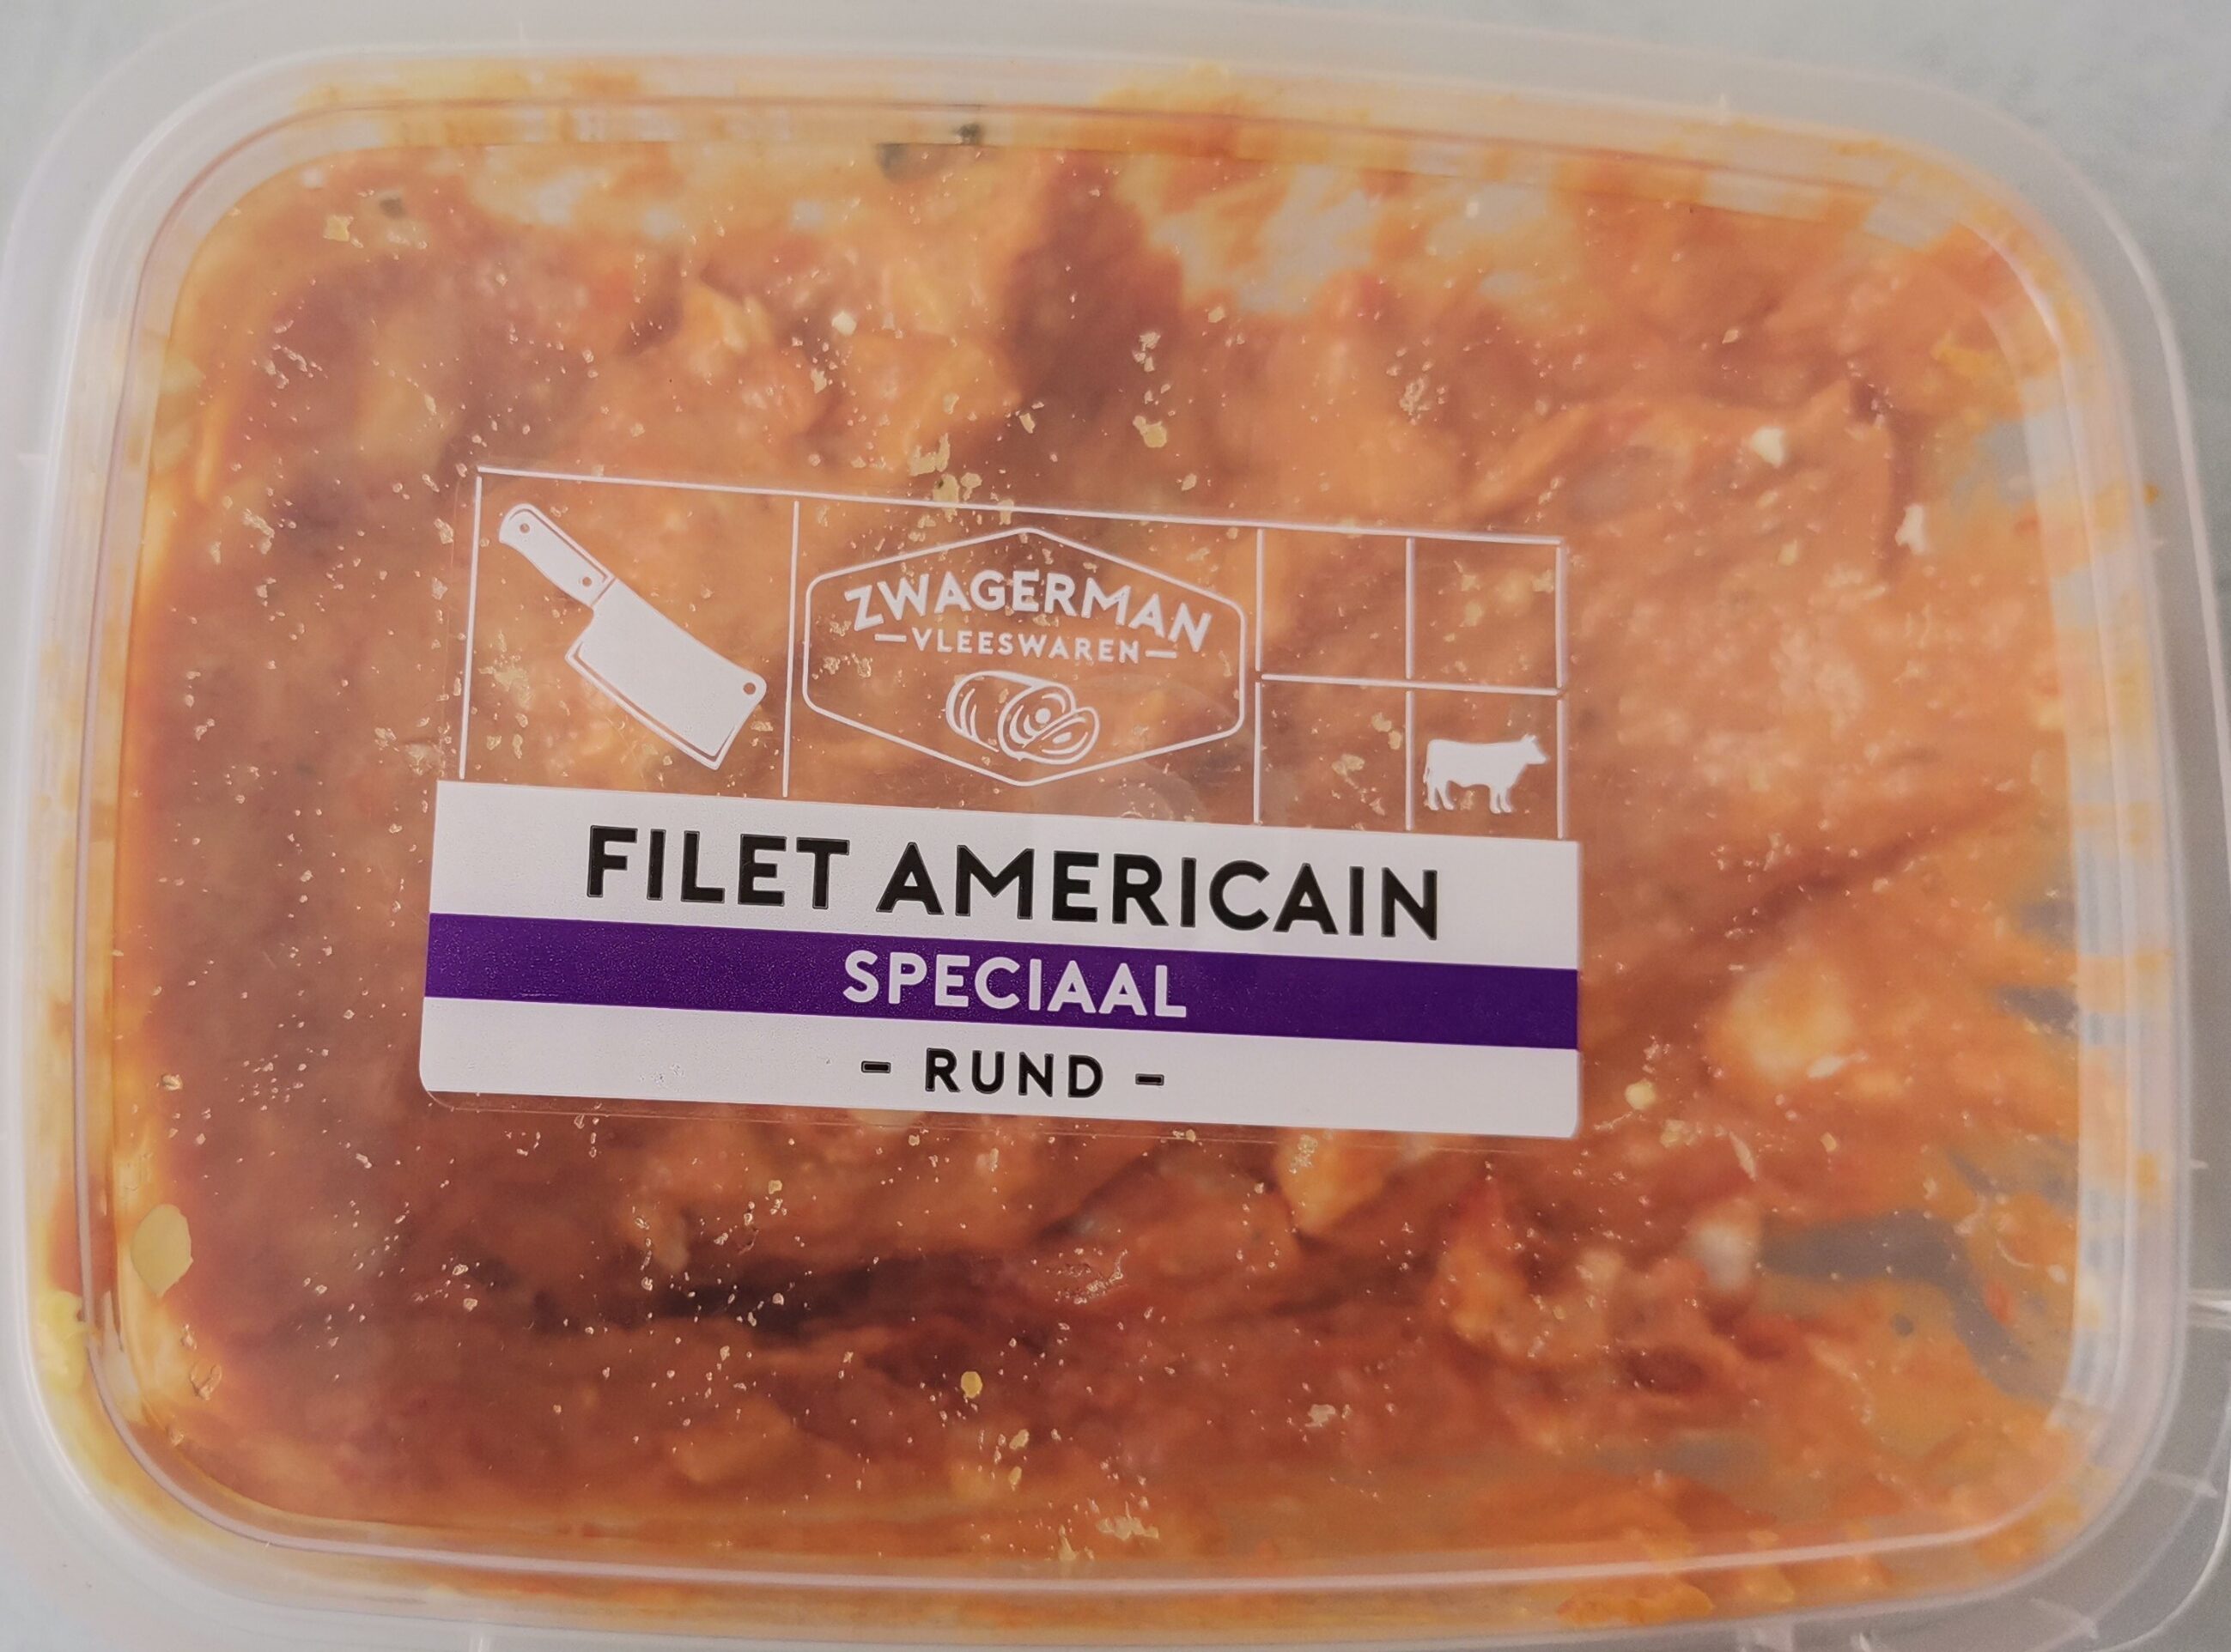 Filet America speciaal rund - Product